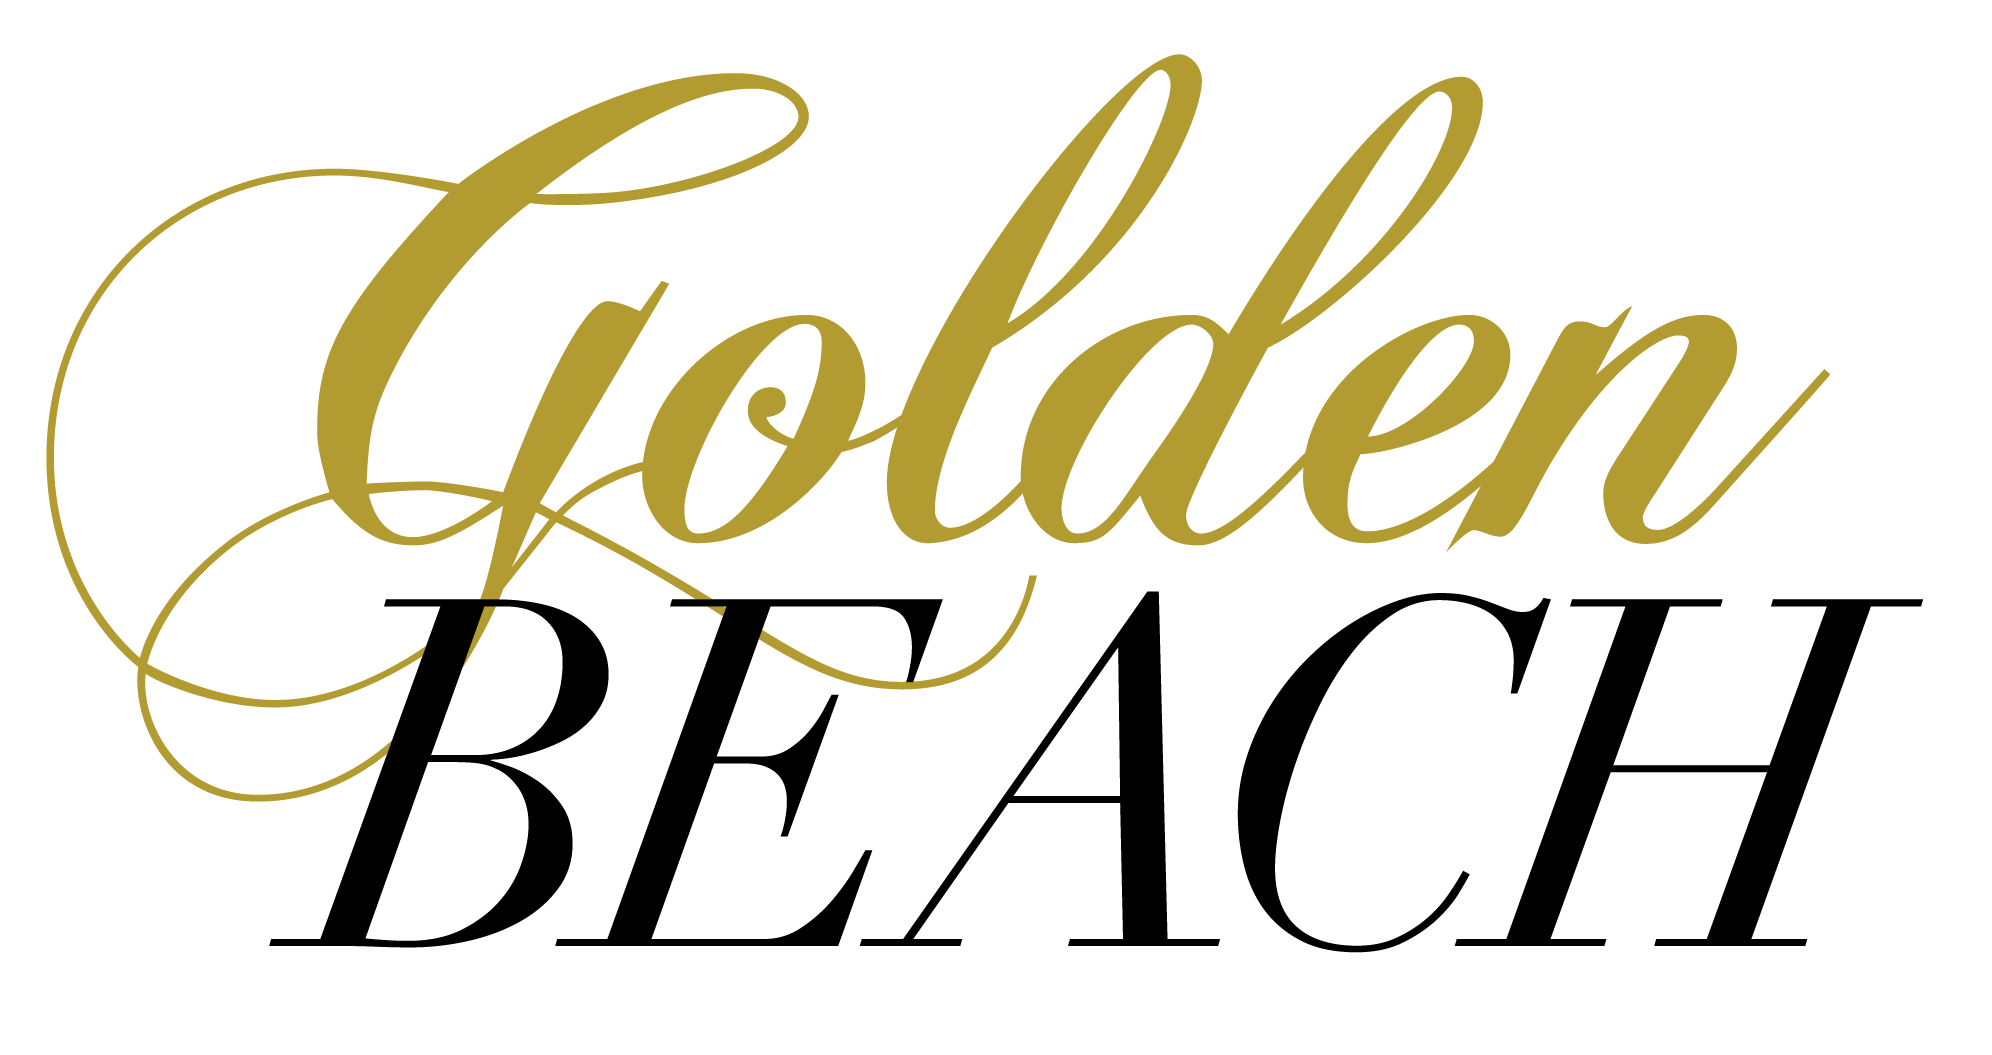 Town of Golden Beach - Town of Golden Beach Video on Demand - organization logo